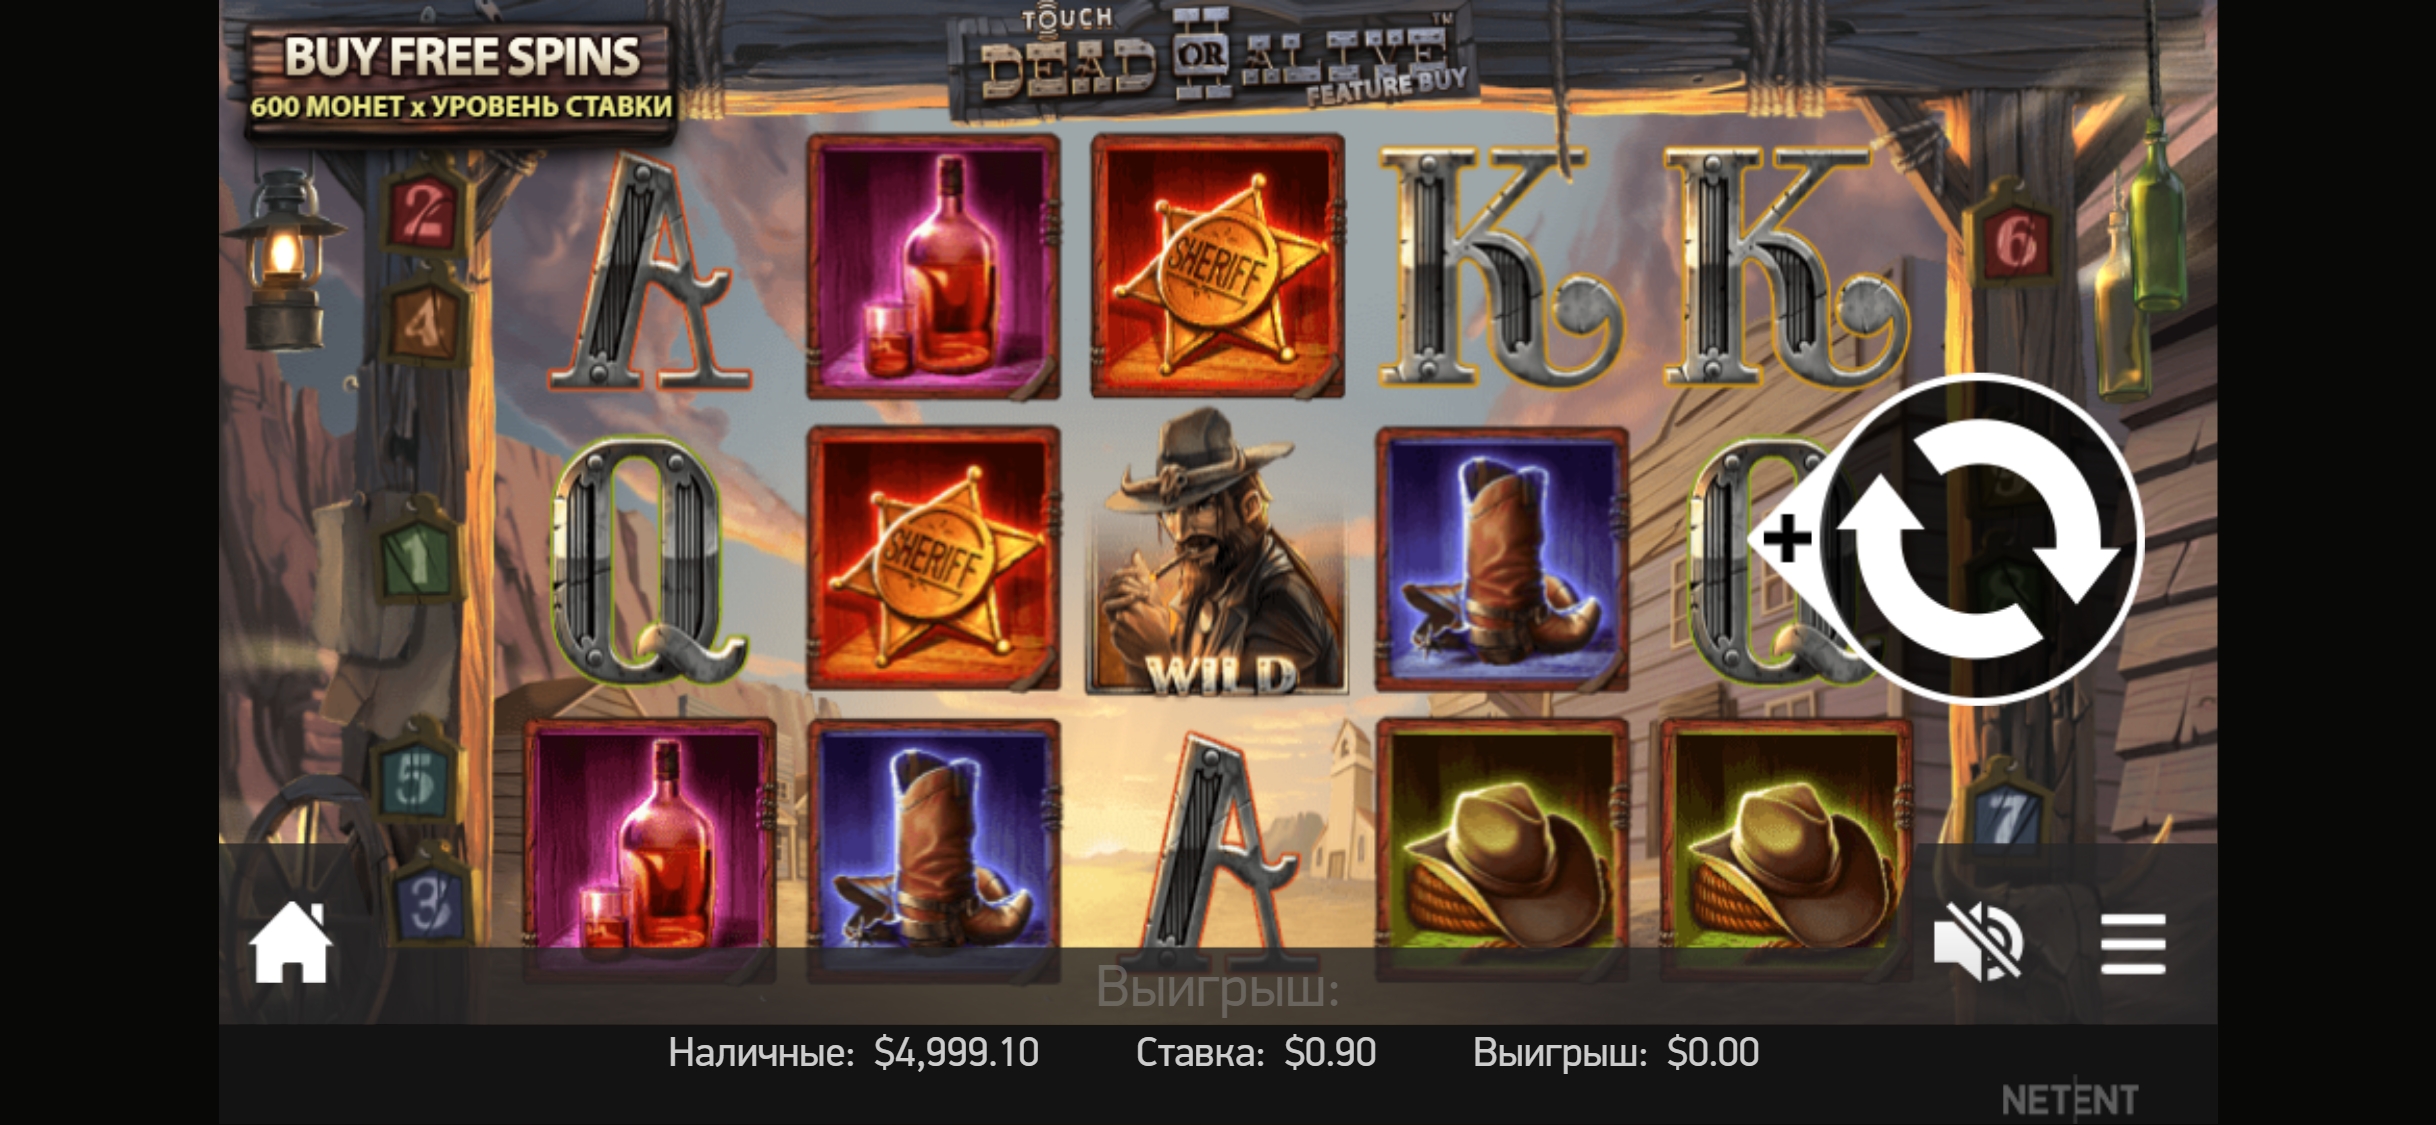 Jozz Casino Mobile Slot Games Review